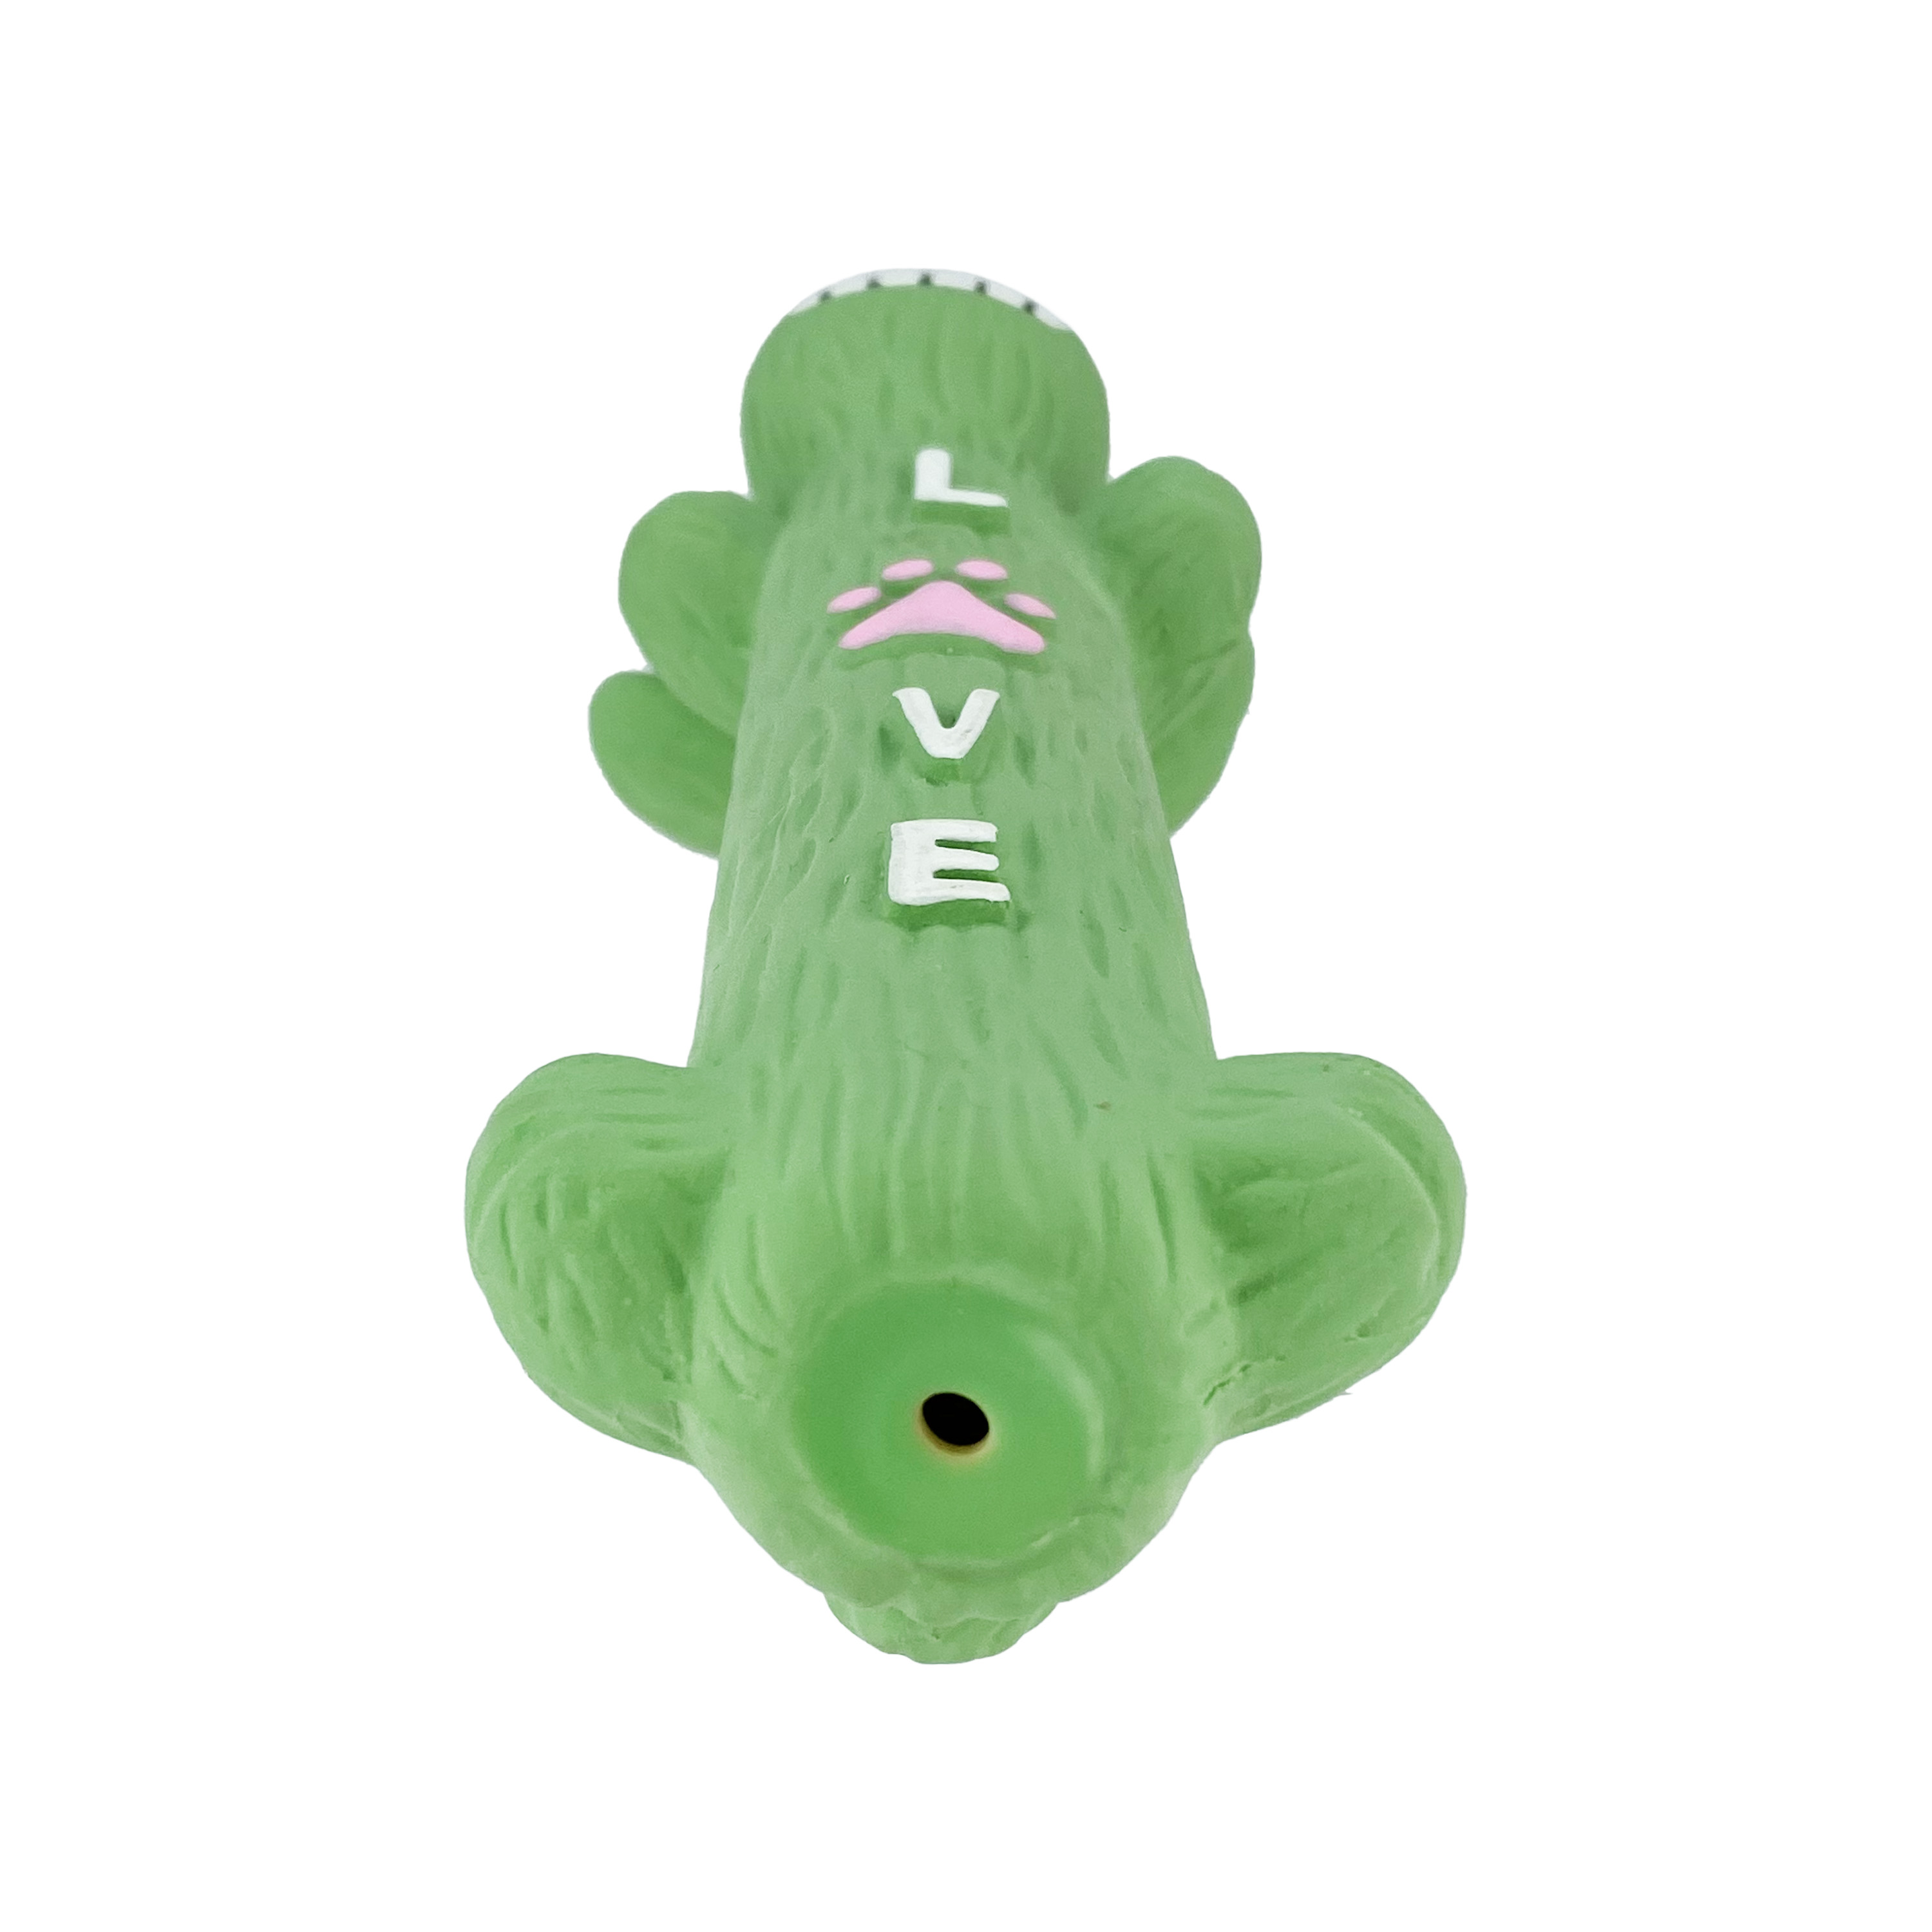 Multipet Loofa Latex Smiling Plush Dog Toy, Green - image 5 of 9